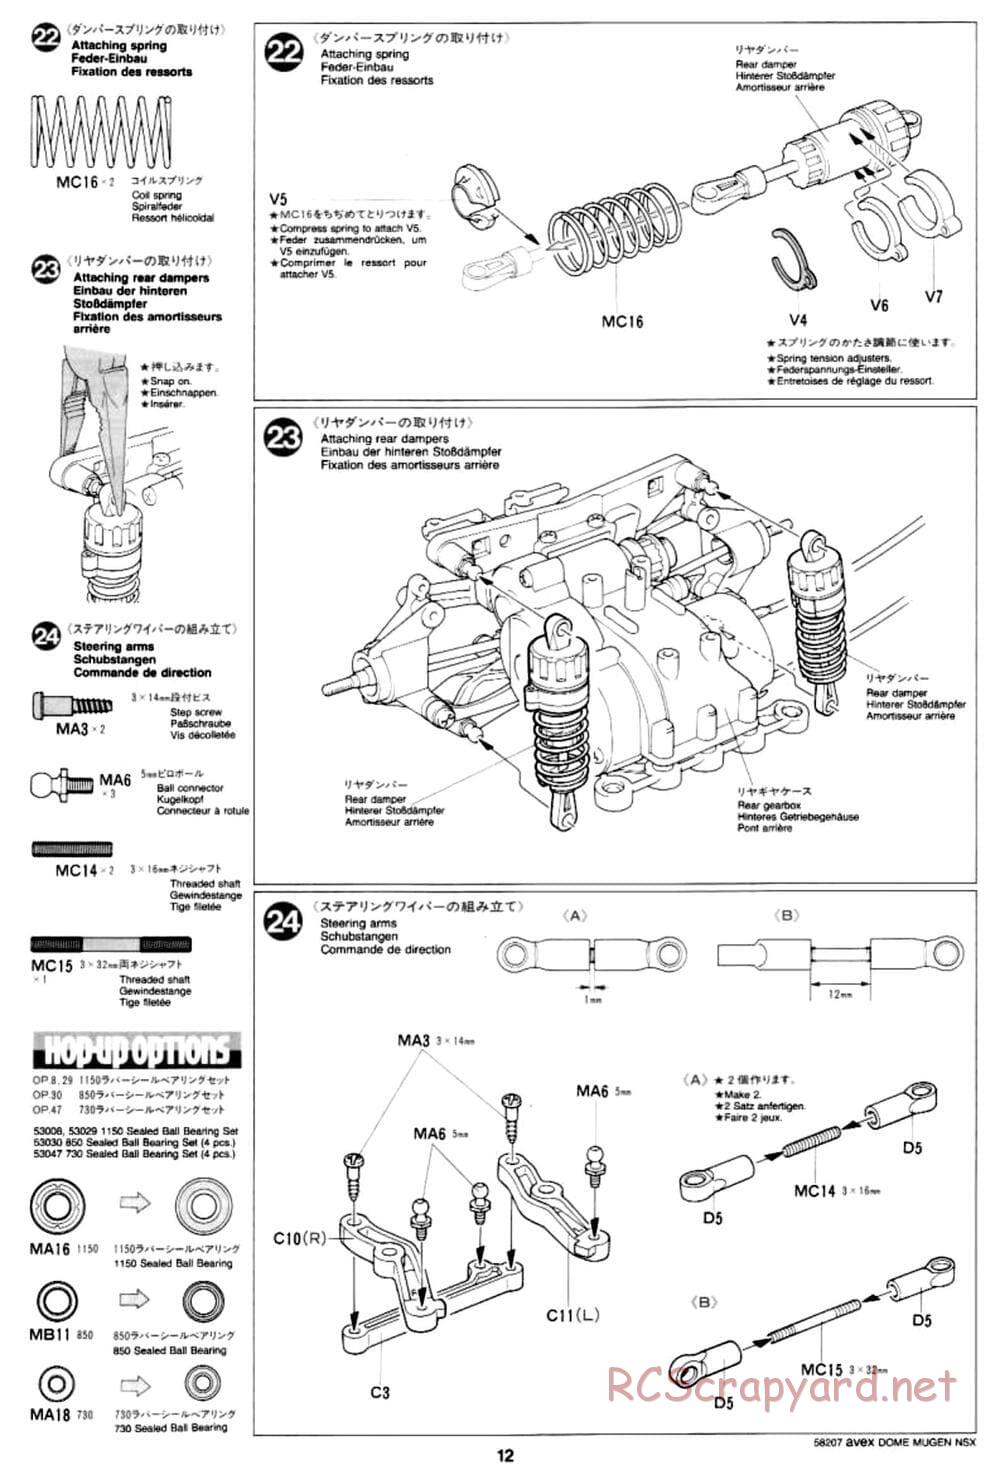 Tamiya - Avex Dome Mugen NSX - TA-03R Chassis - Manual - Page 12